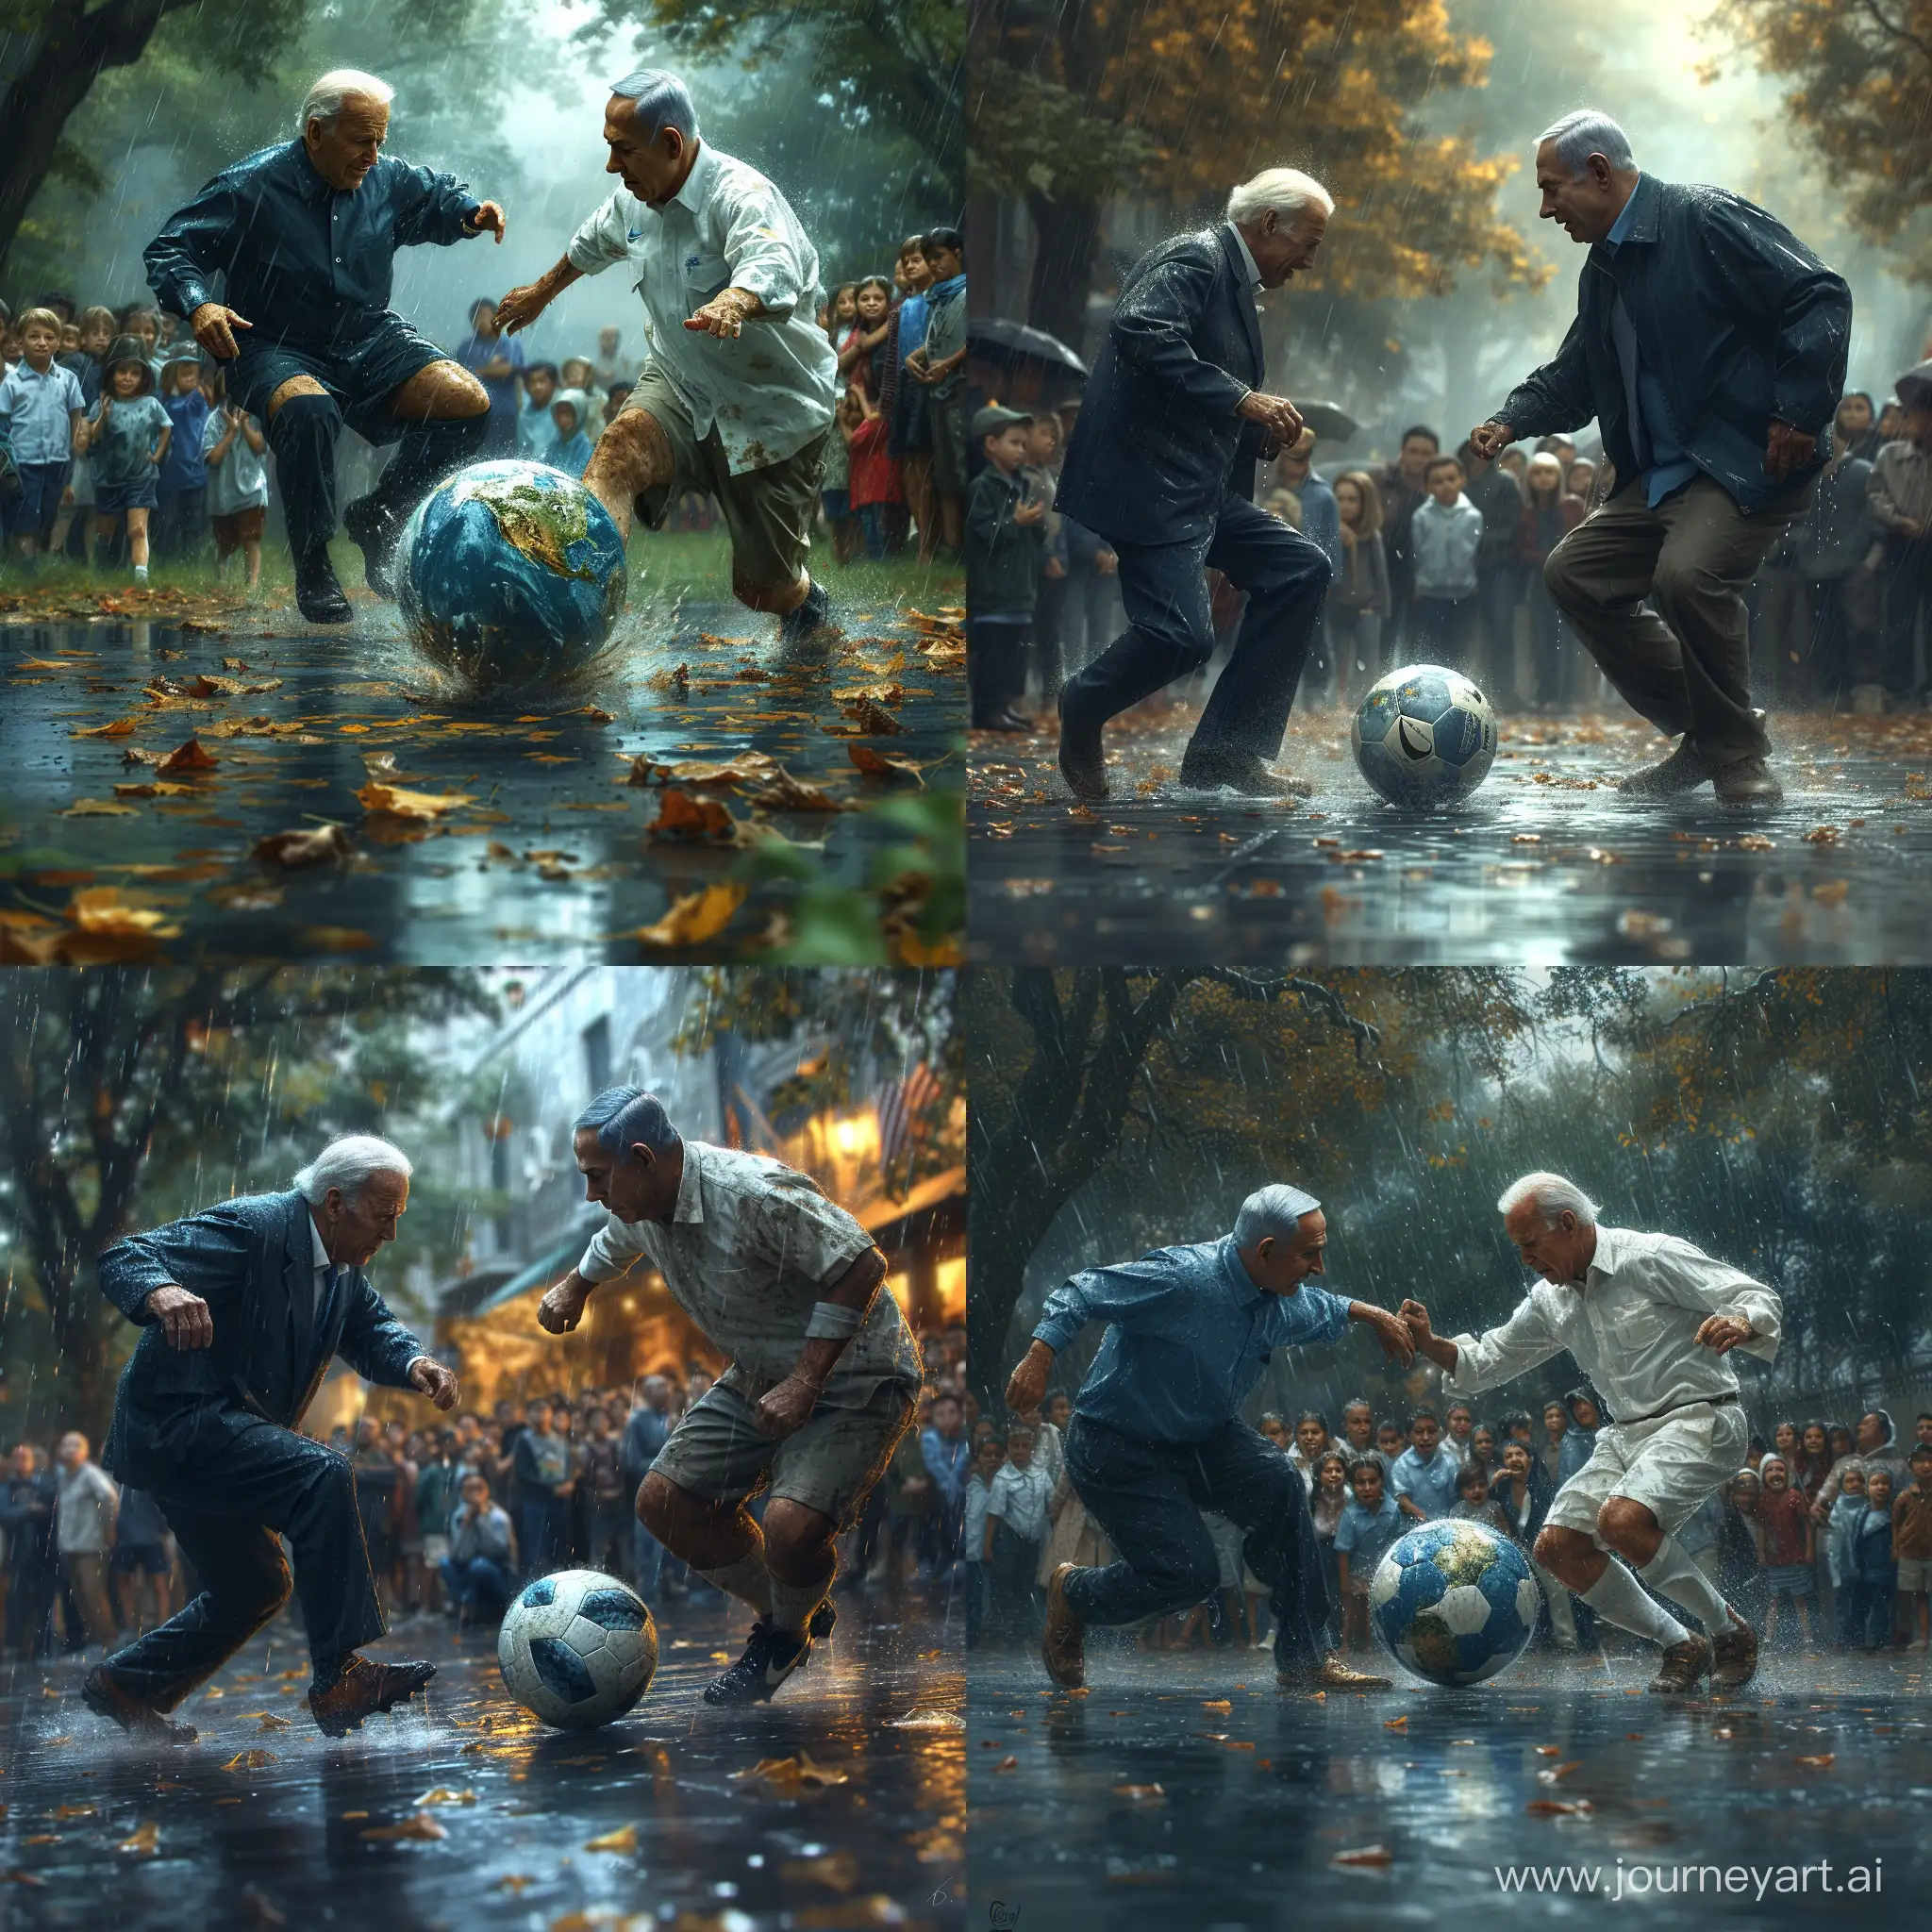 Joe-Biden-and-Benjamin-Netanyahu-Playing-Soccer-in-Rain-with-Earth-Ball